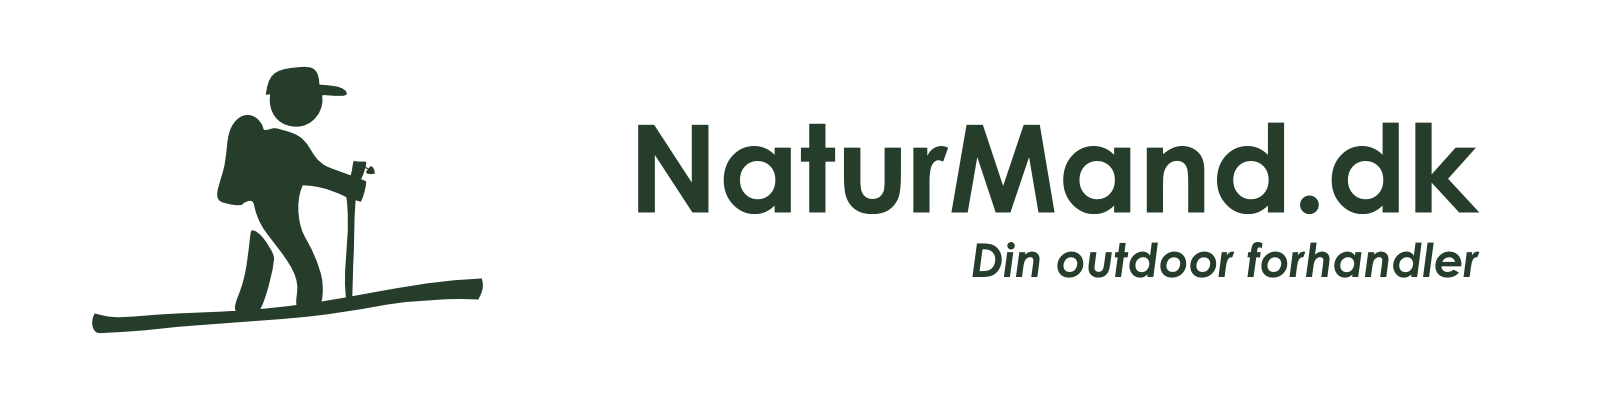 NaturMand.dk